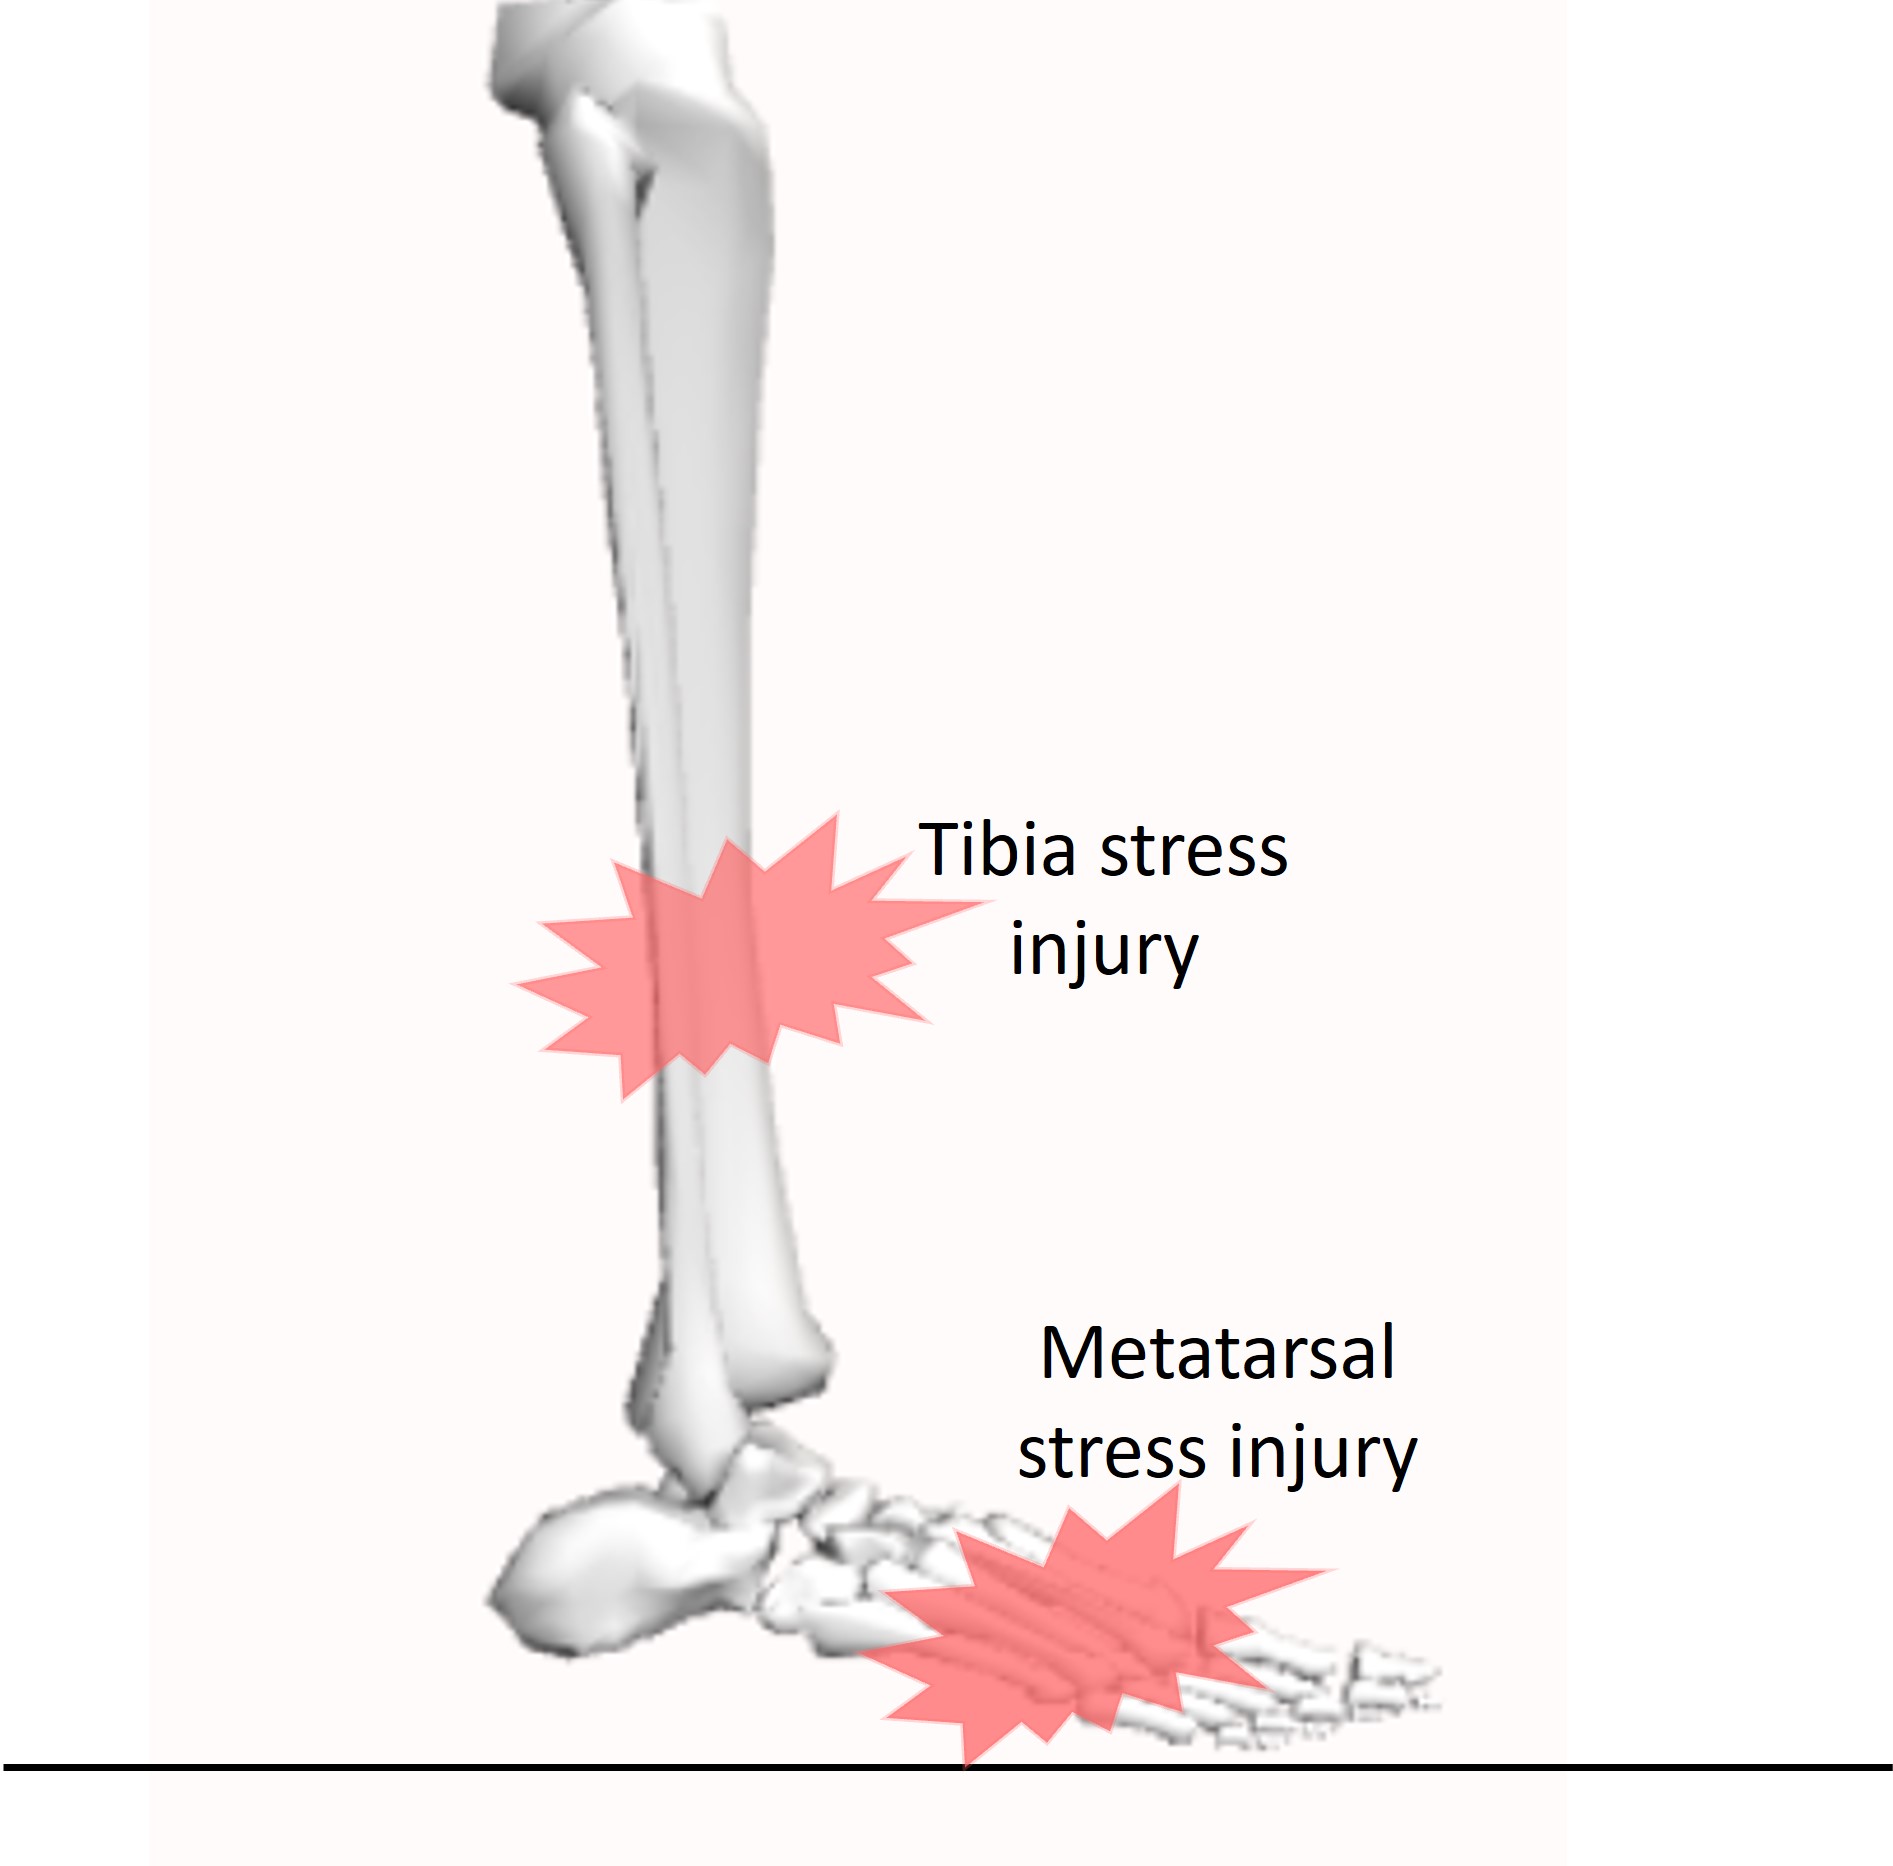 Bone stress injuries